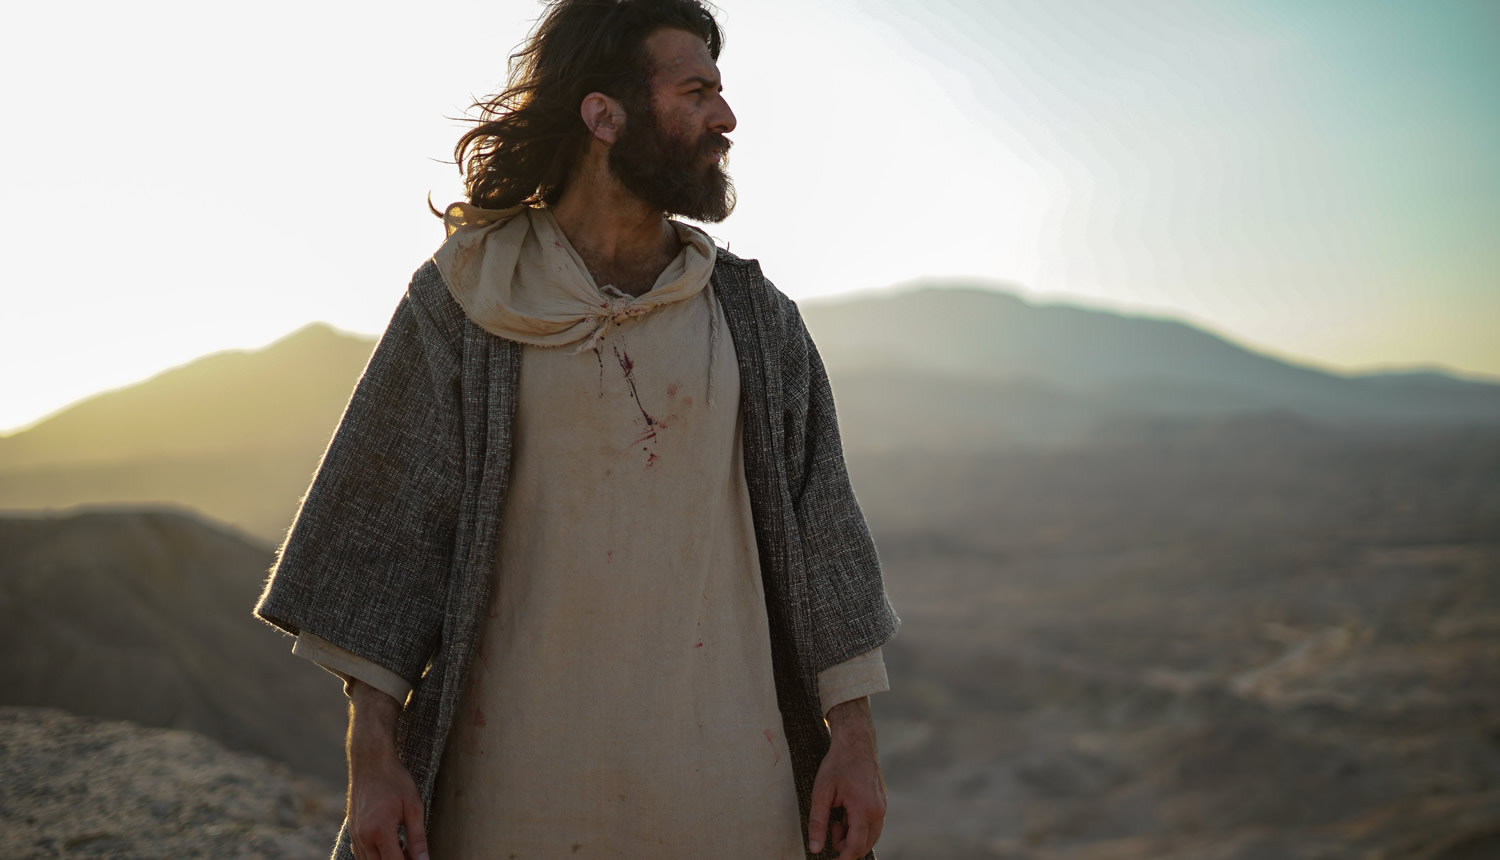 jesus in the wilderness 40 days